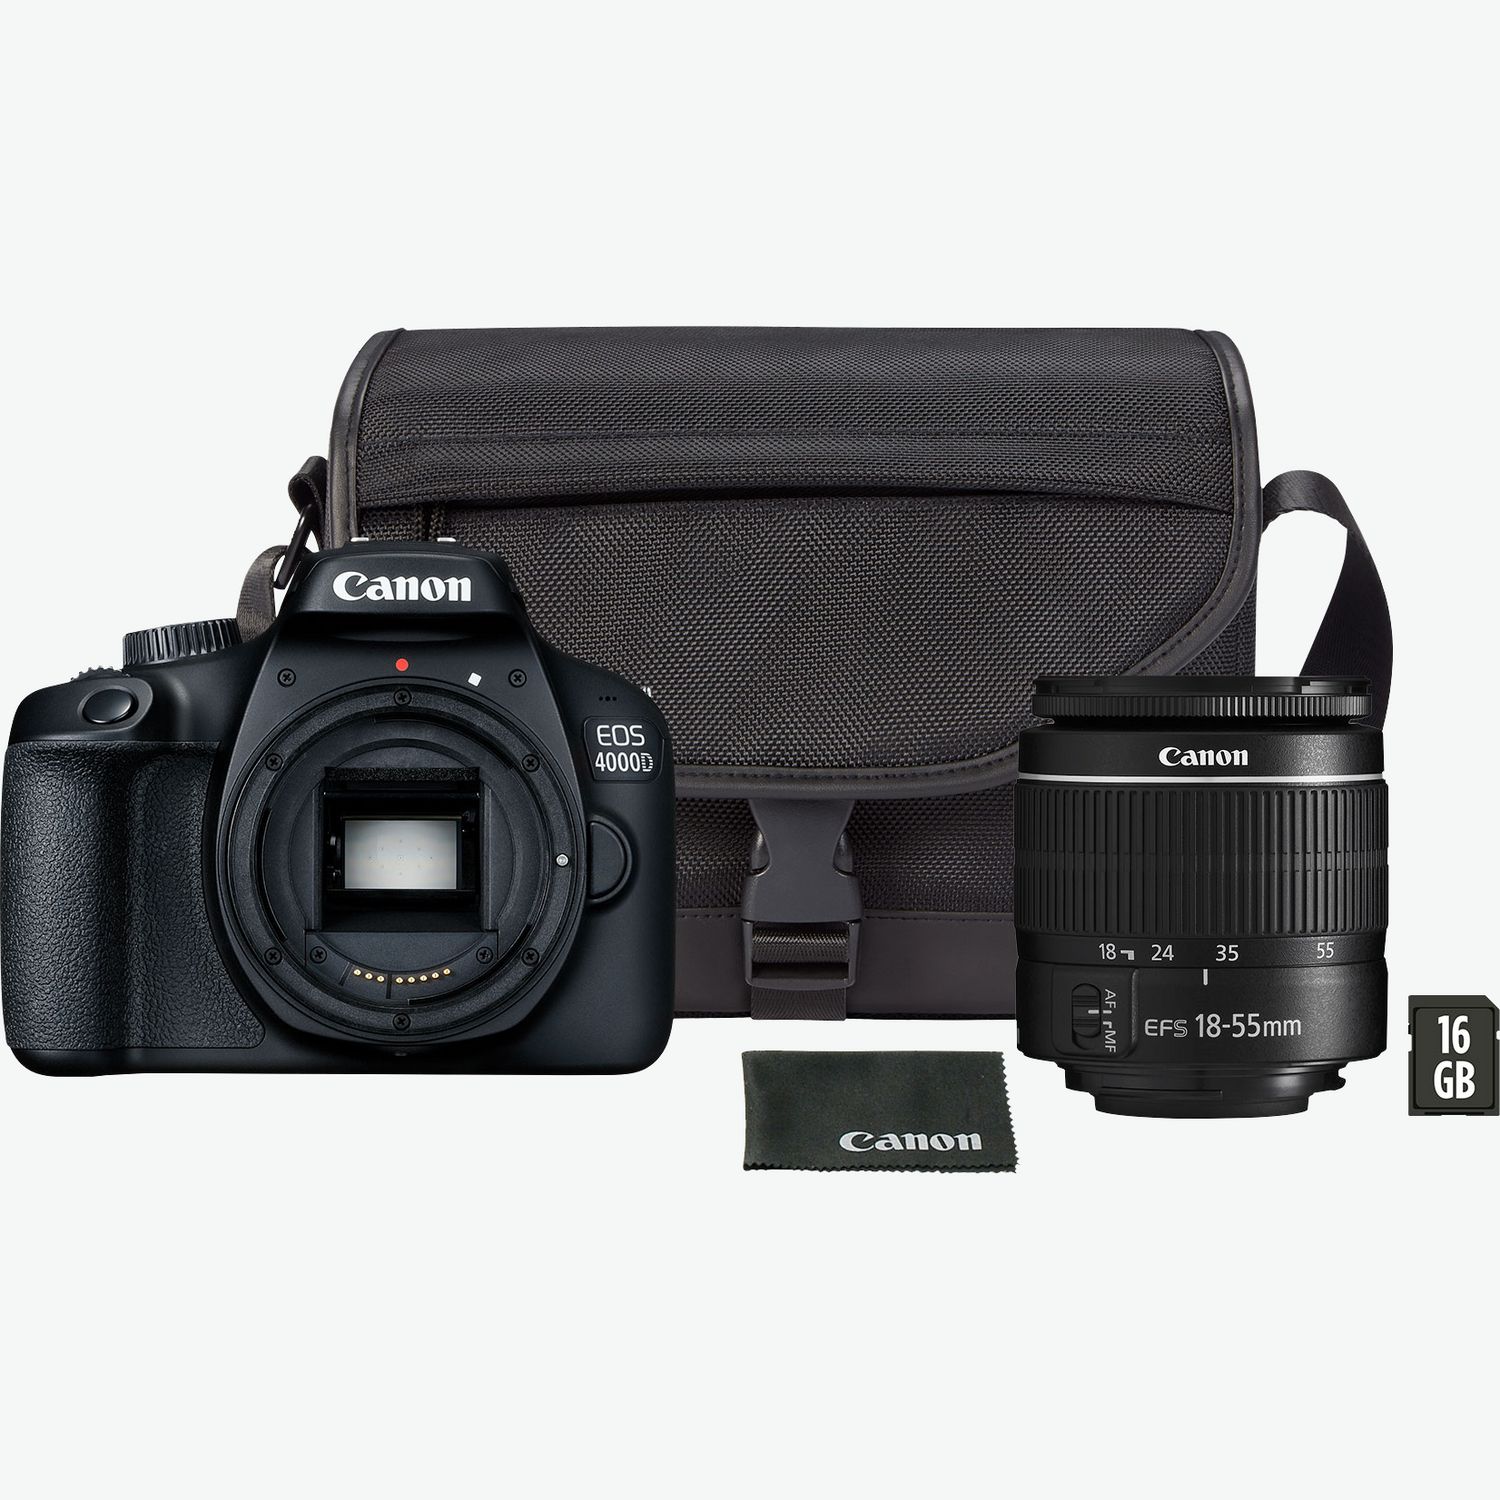 Canon EOS 4000D 18.0 MP Digital SLR Camera - Black for sale online